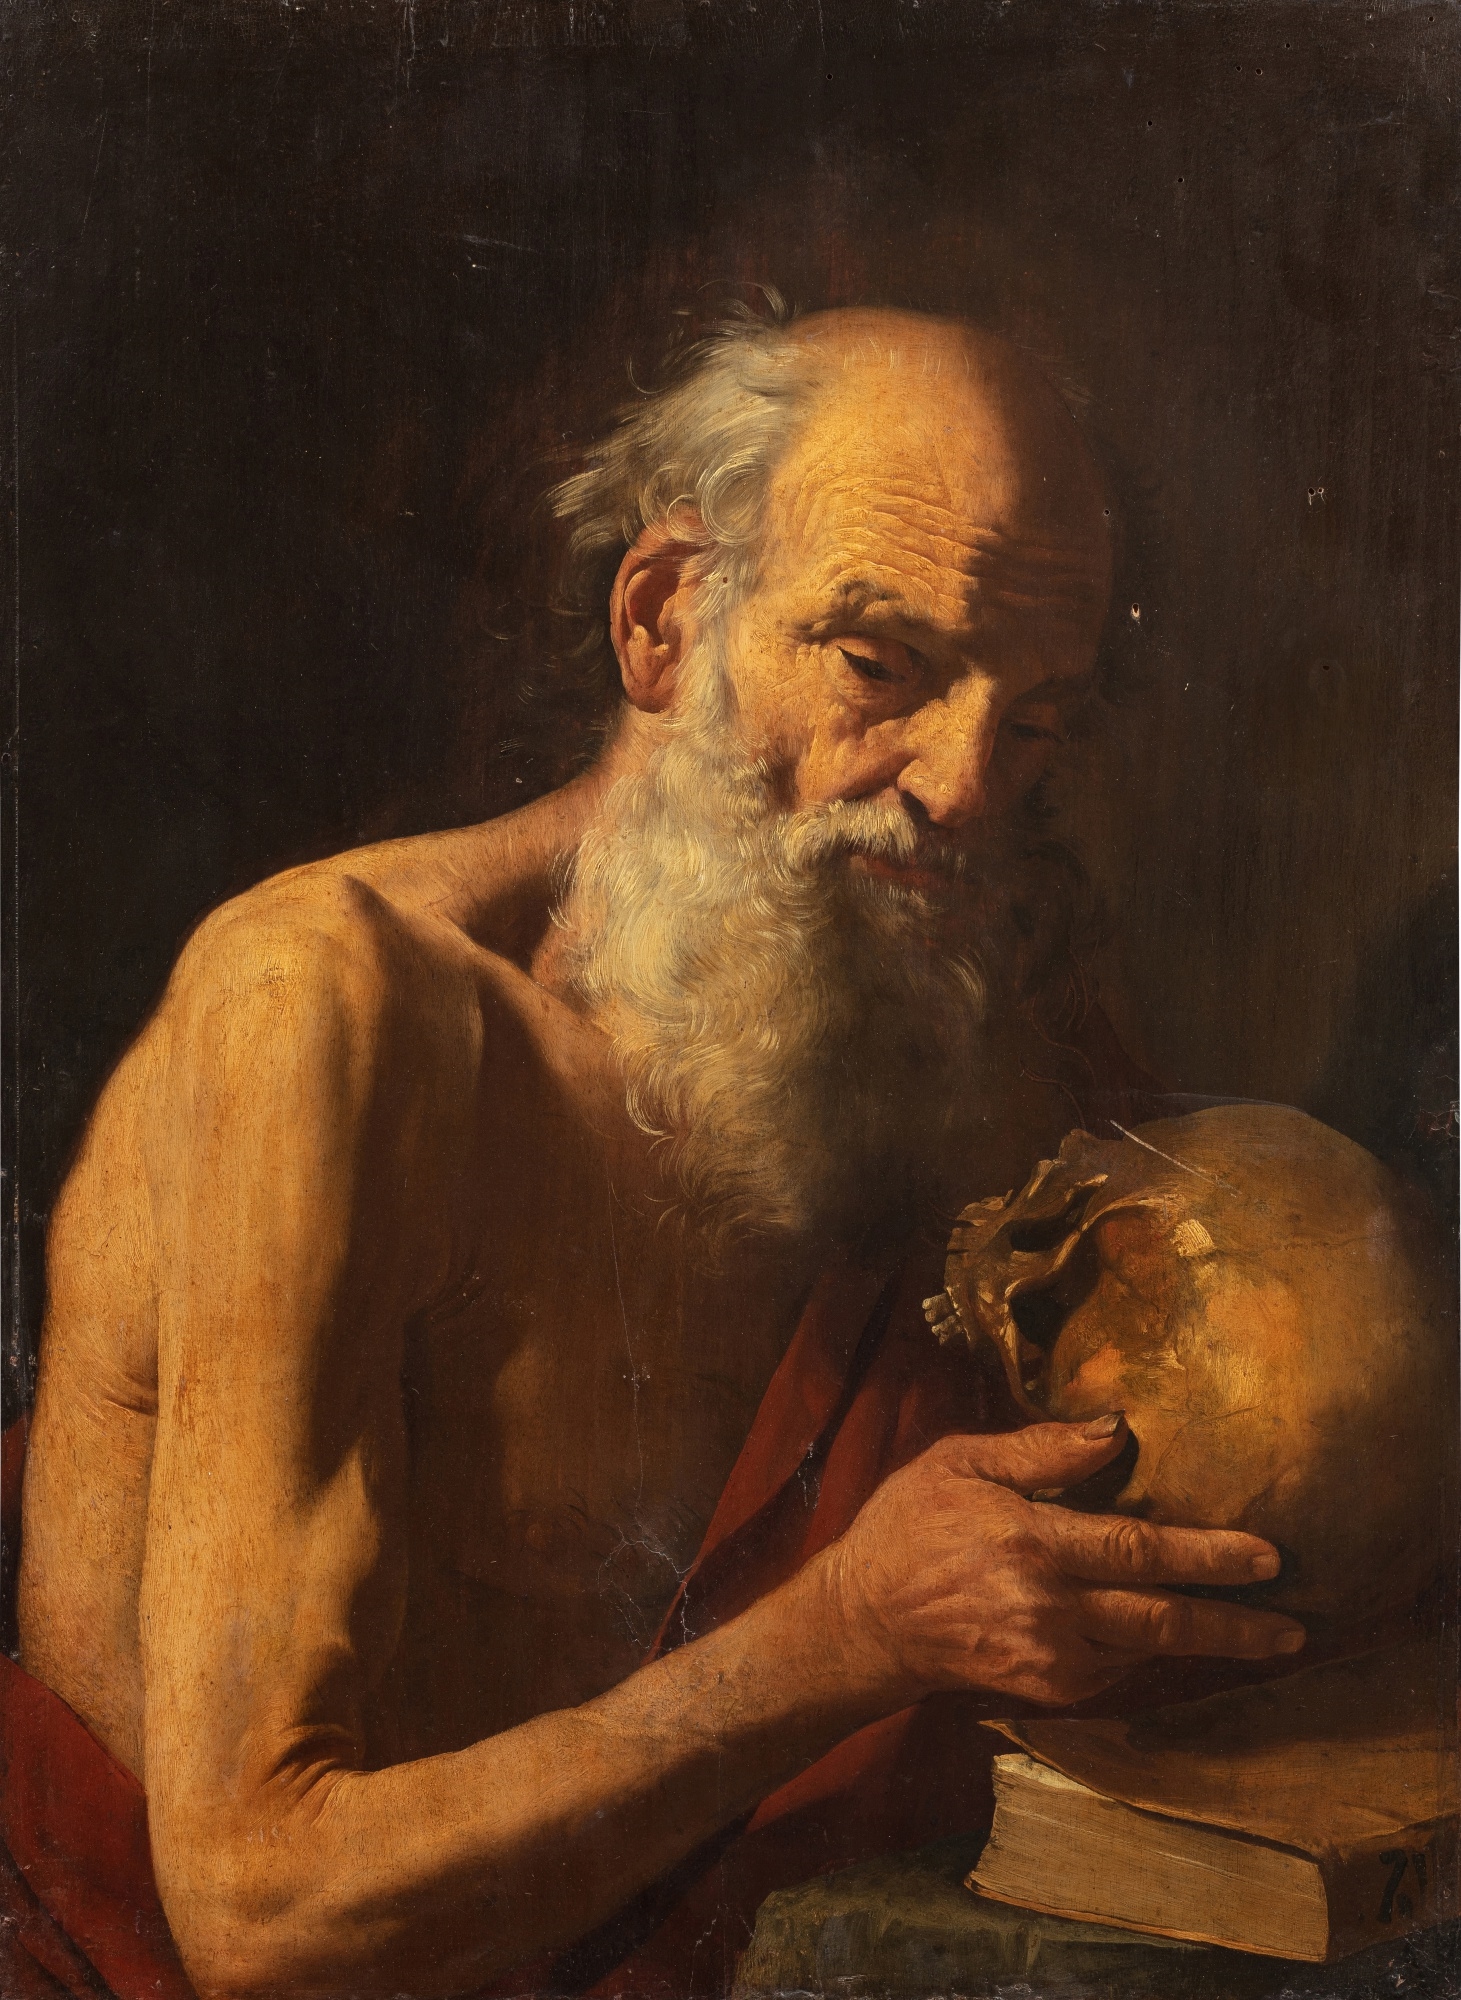 Saint Jerome contemplating a skull by Hendryck Van Somer